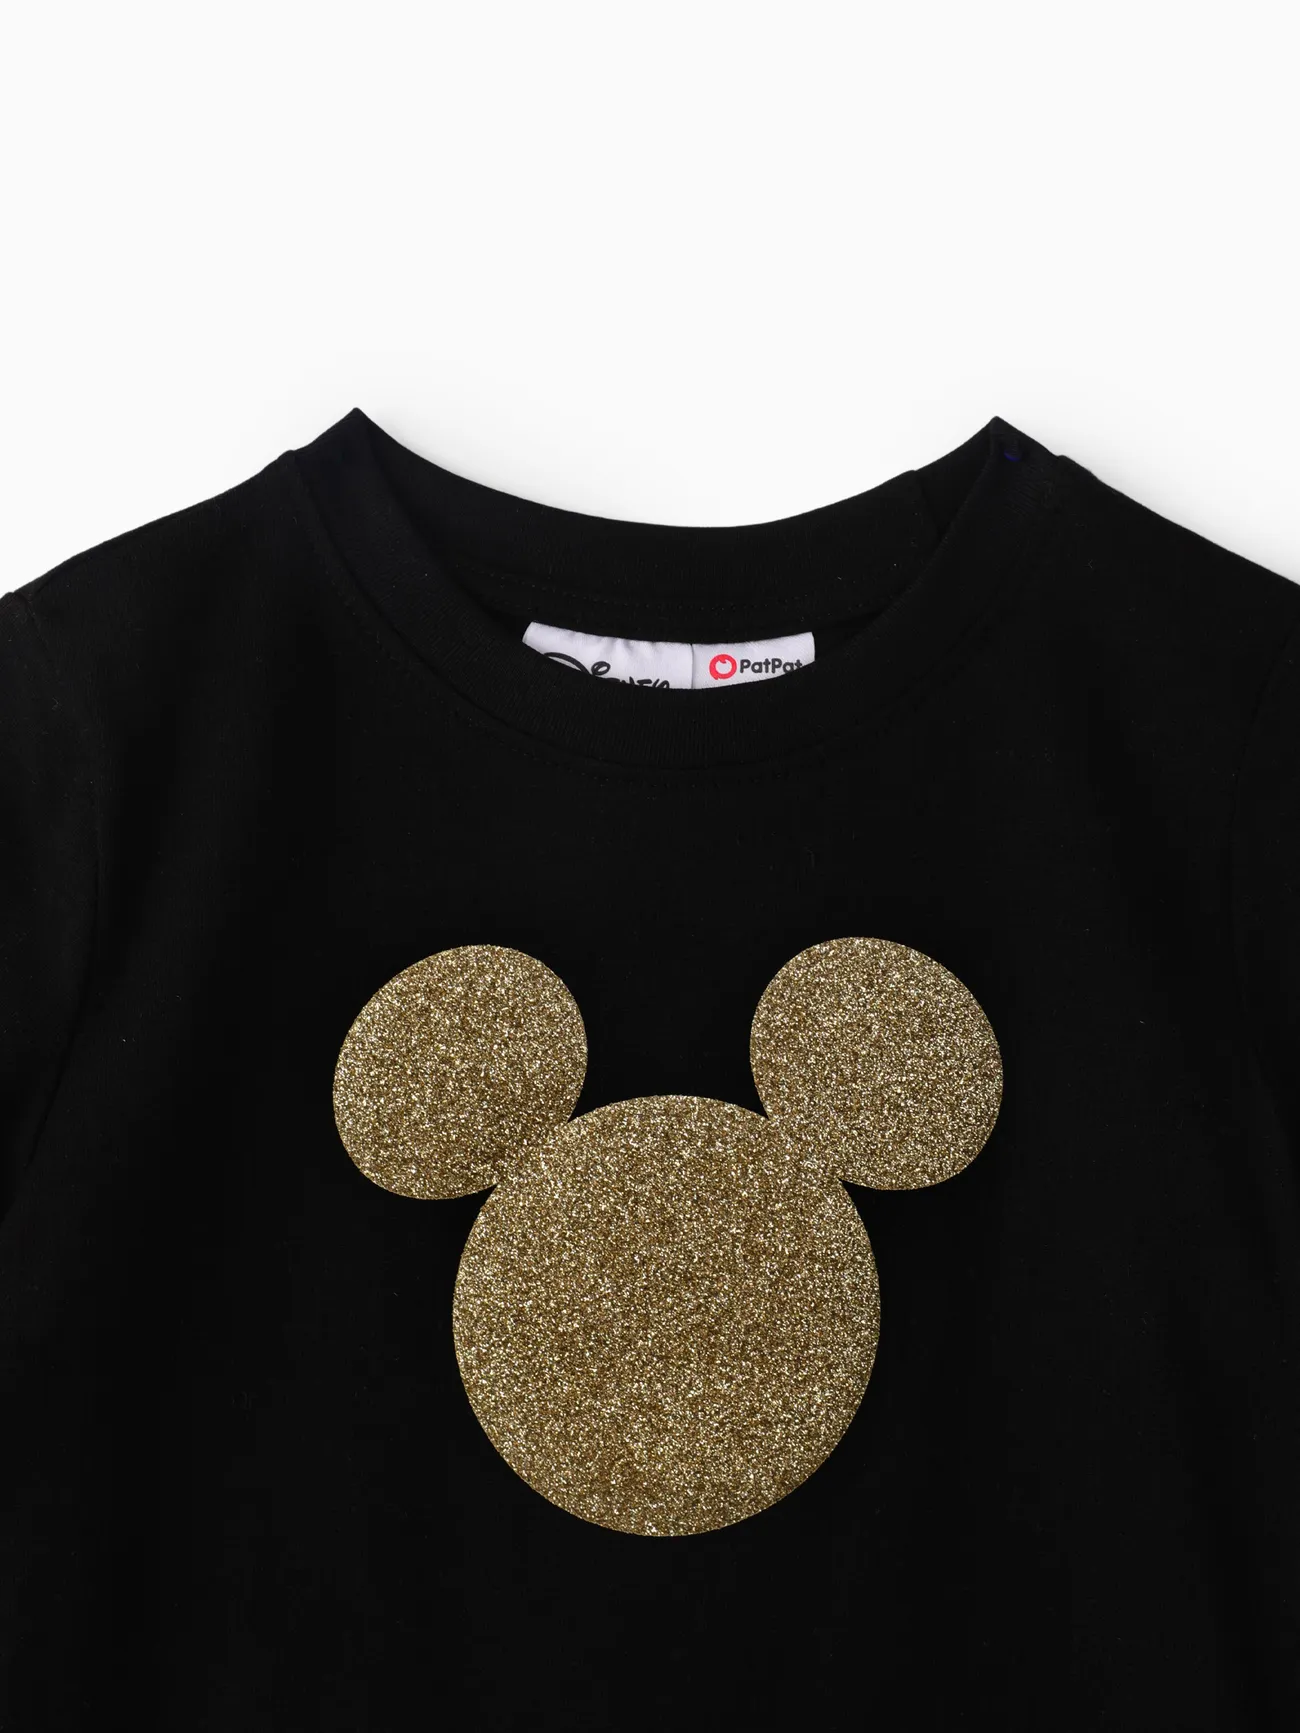 Disney Mickey and Friends 全家裝 短袖 親子裝 套裝 黑色 big image 1